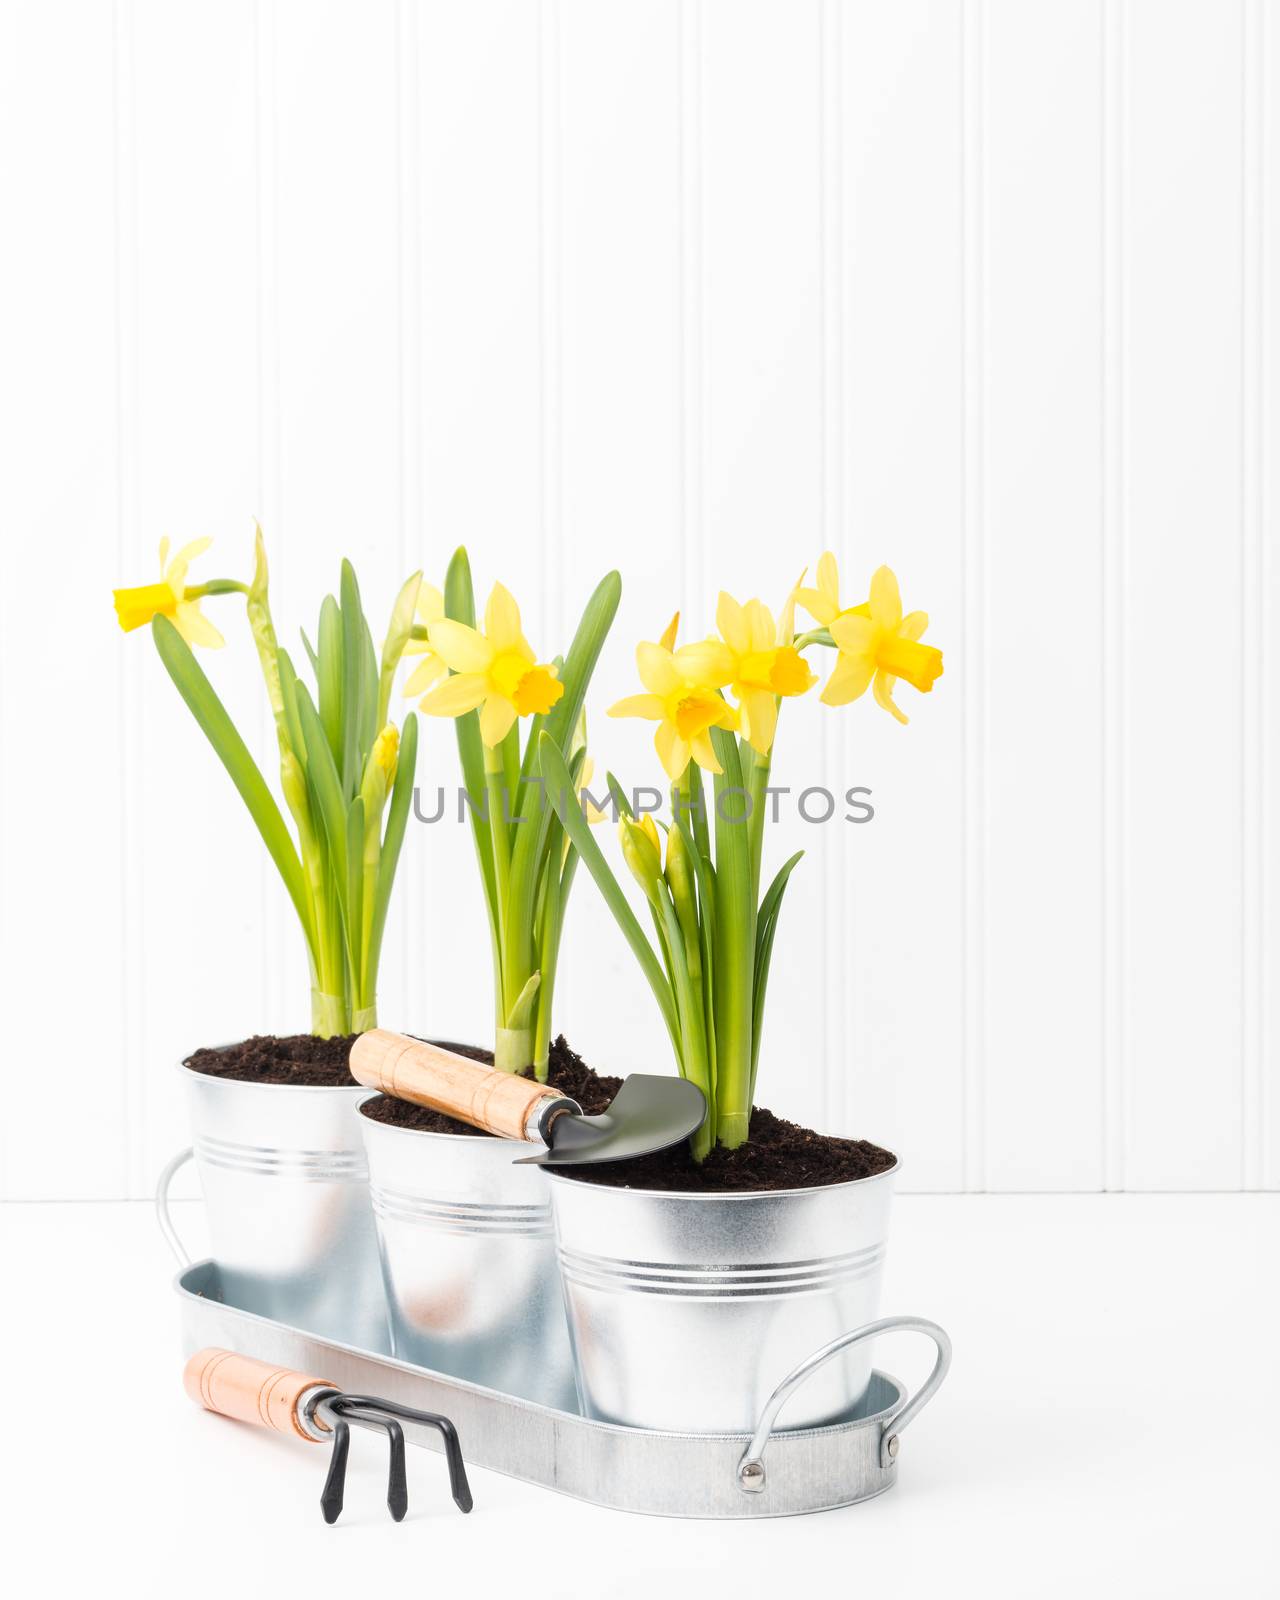 Silver metal planter holding three beautiful spring daffodils.